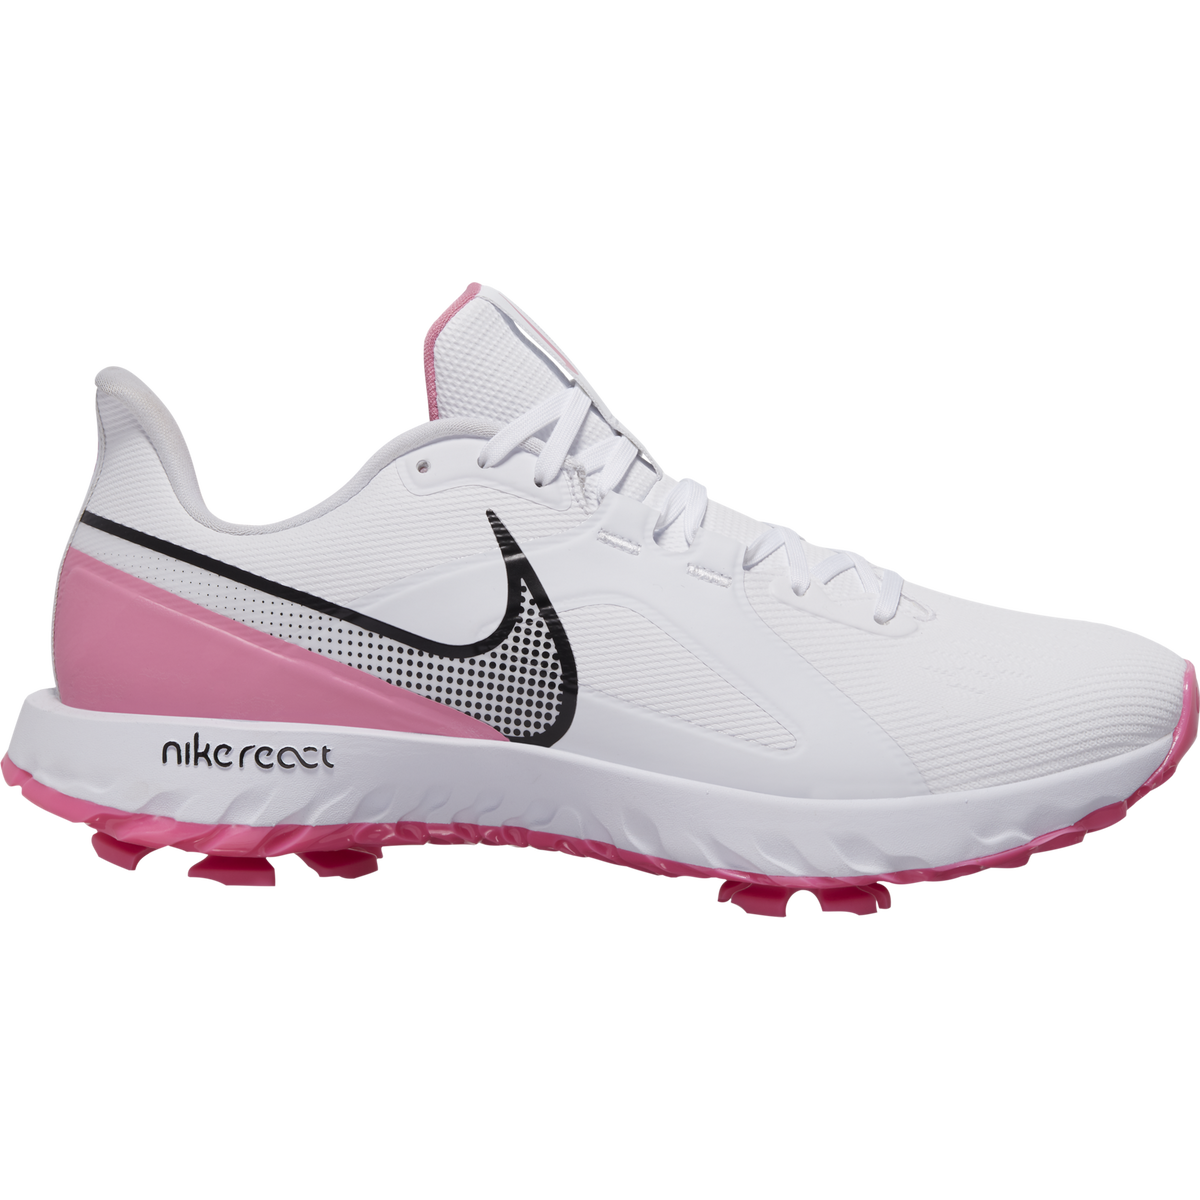 Nike React Infinity Pro Men's Golf Shoe - White/Pink | PGA TOUR Superstore